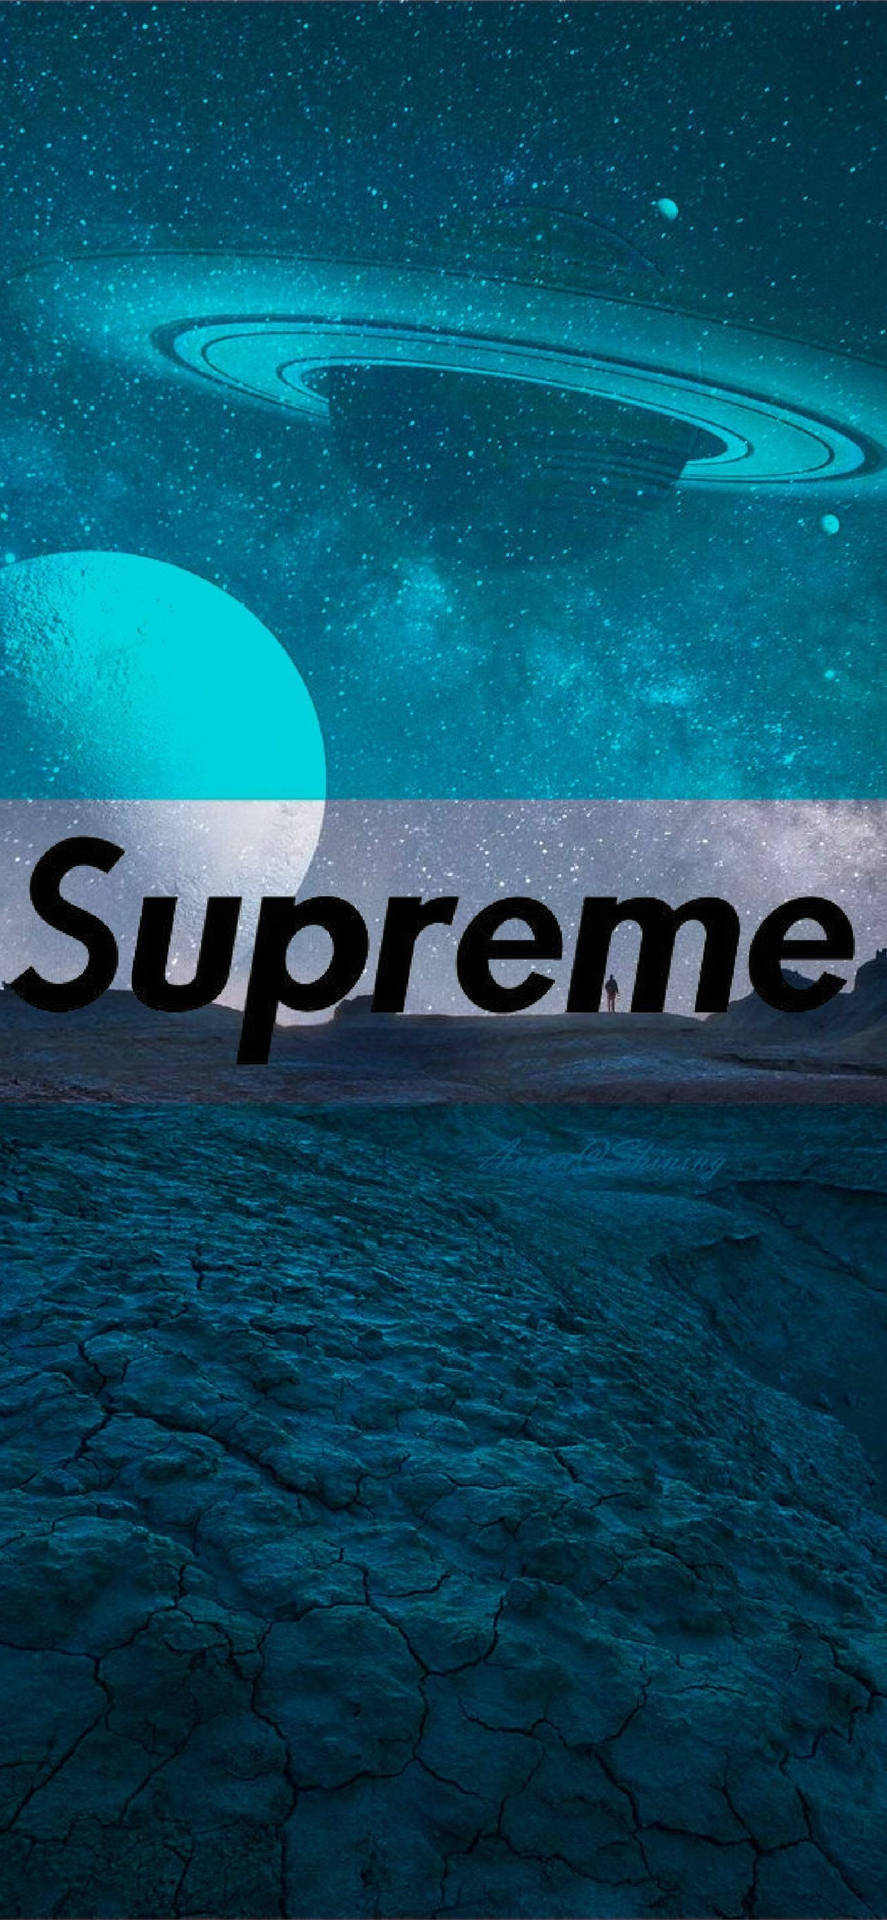 Superior Supreme Logo In Space Wallpaper